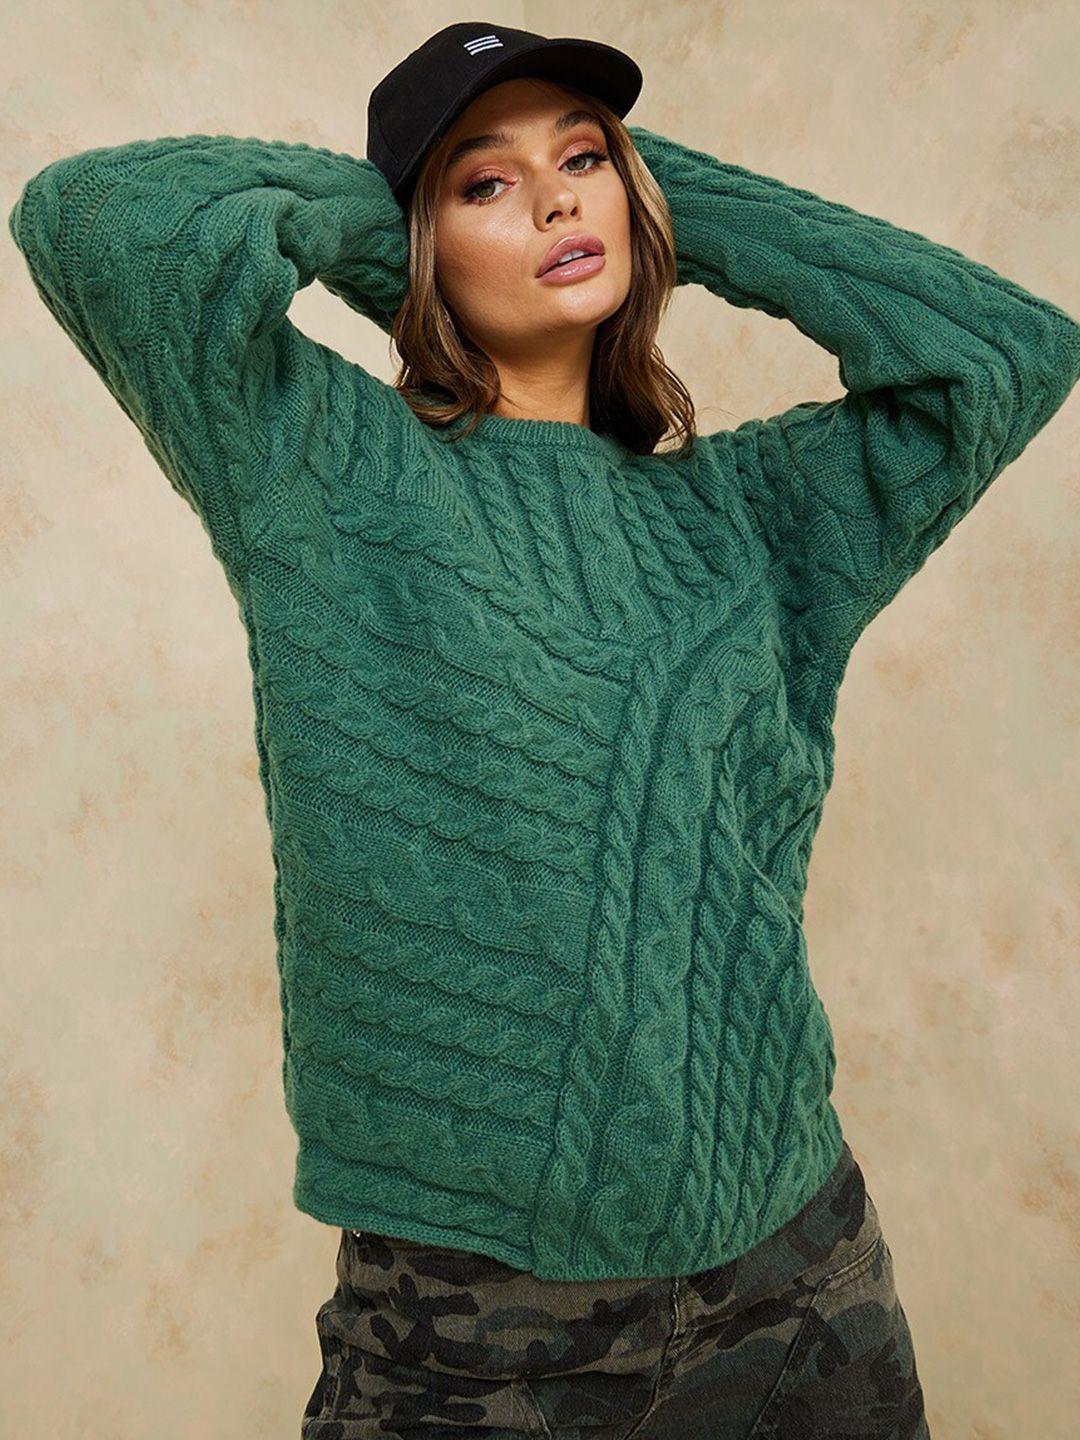 styli-women-green-pullover